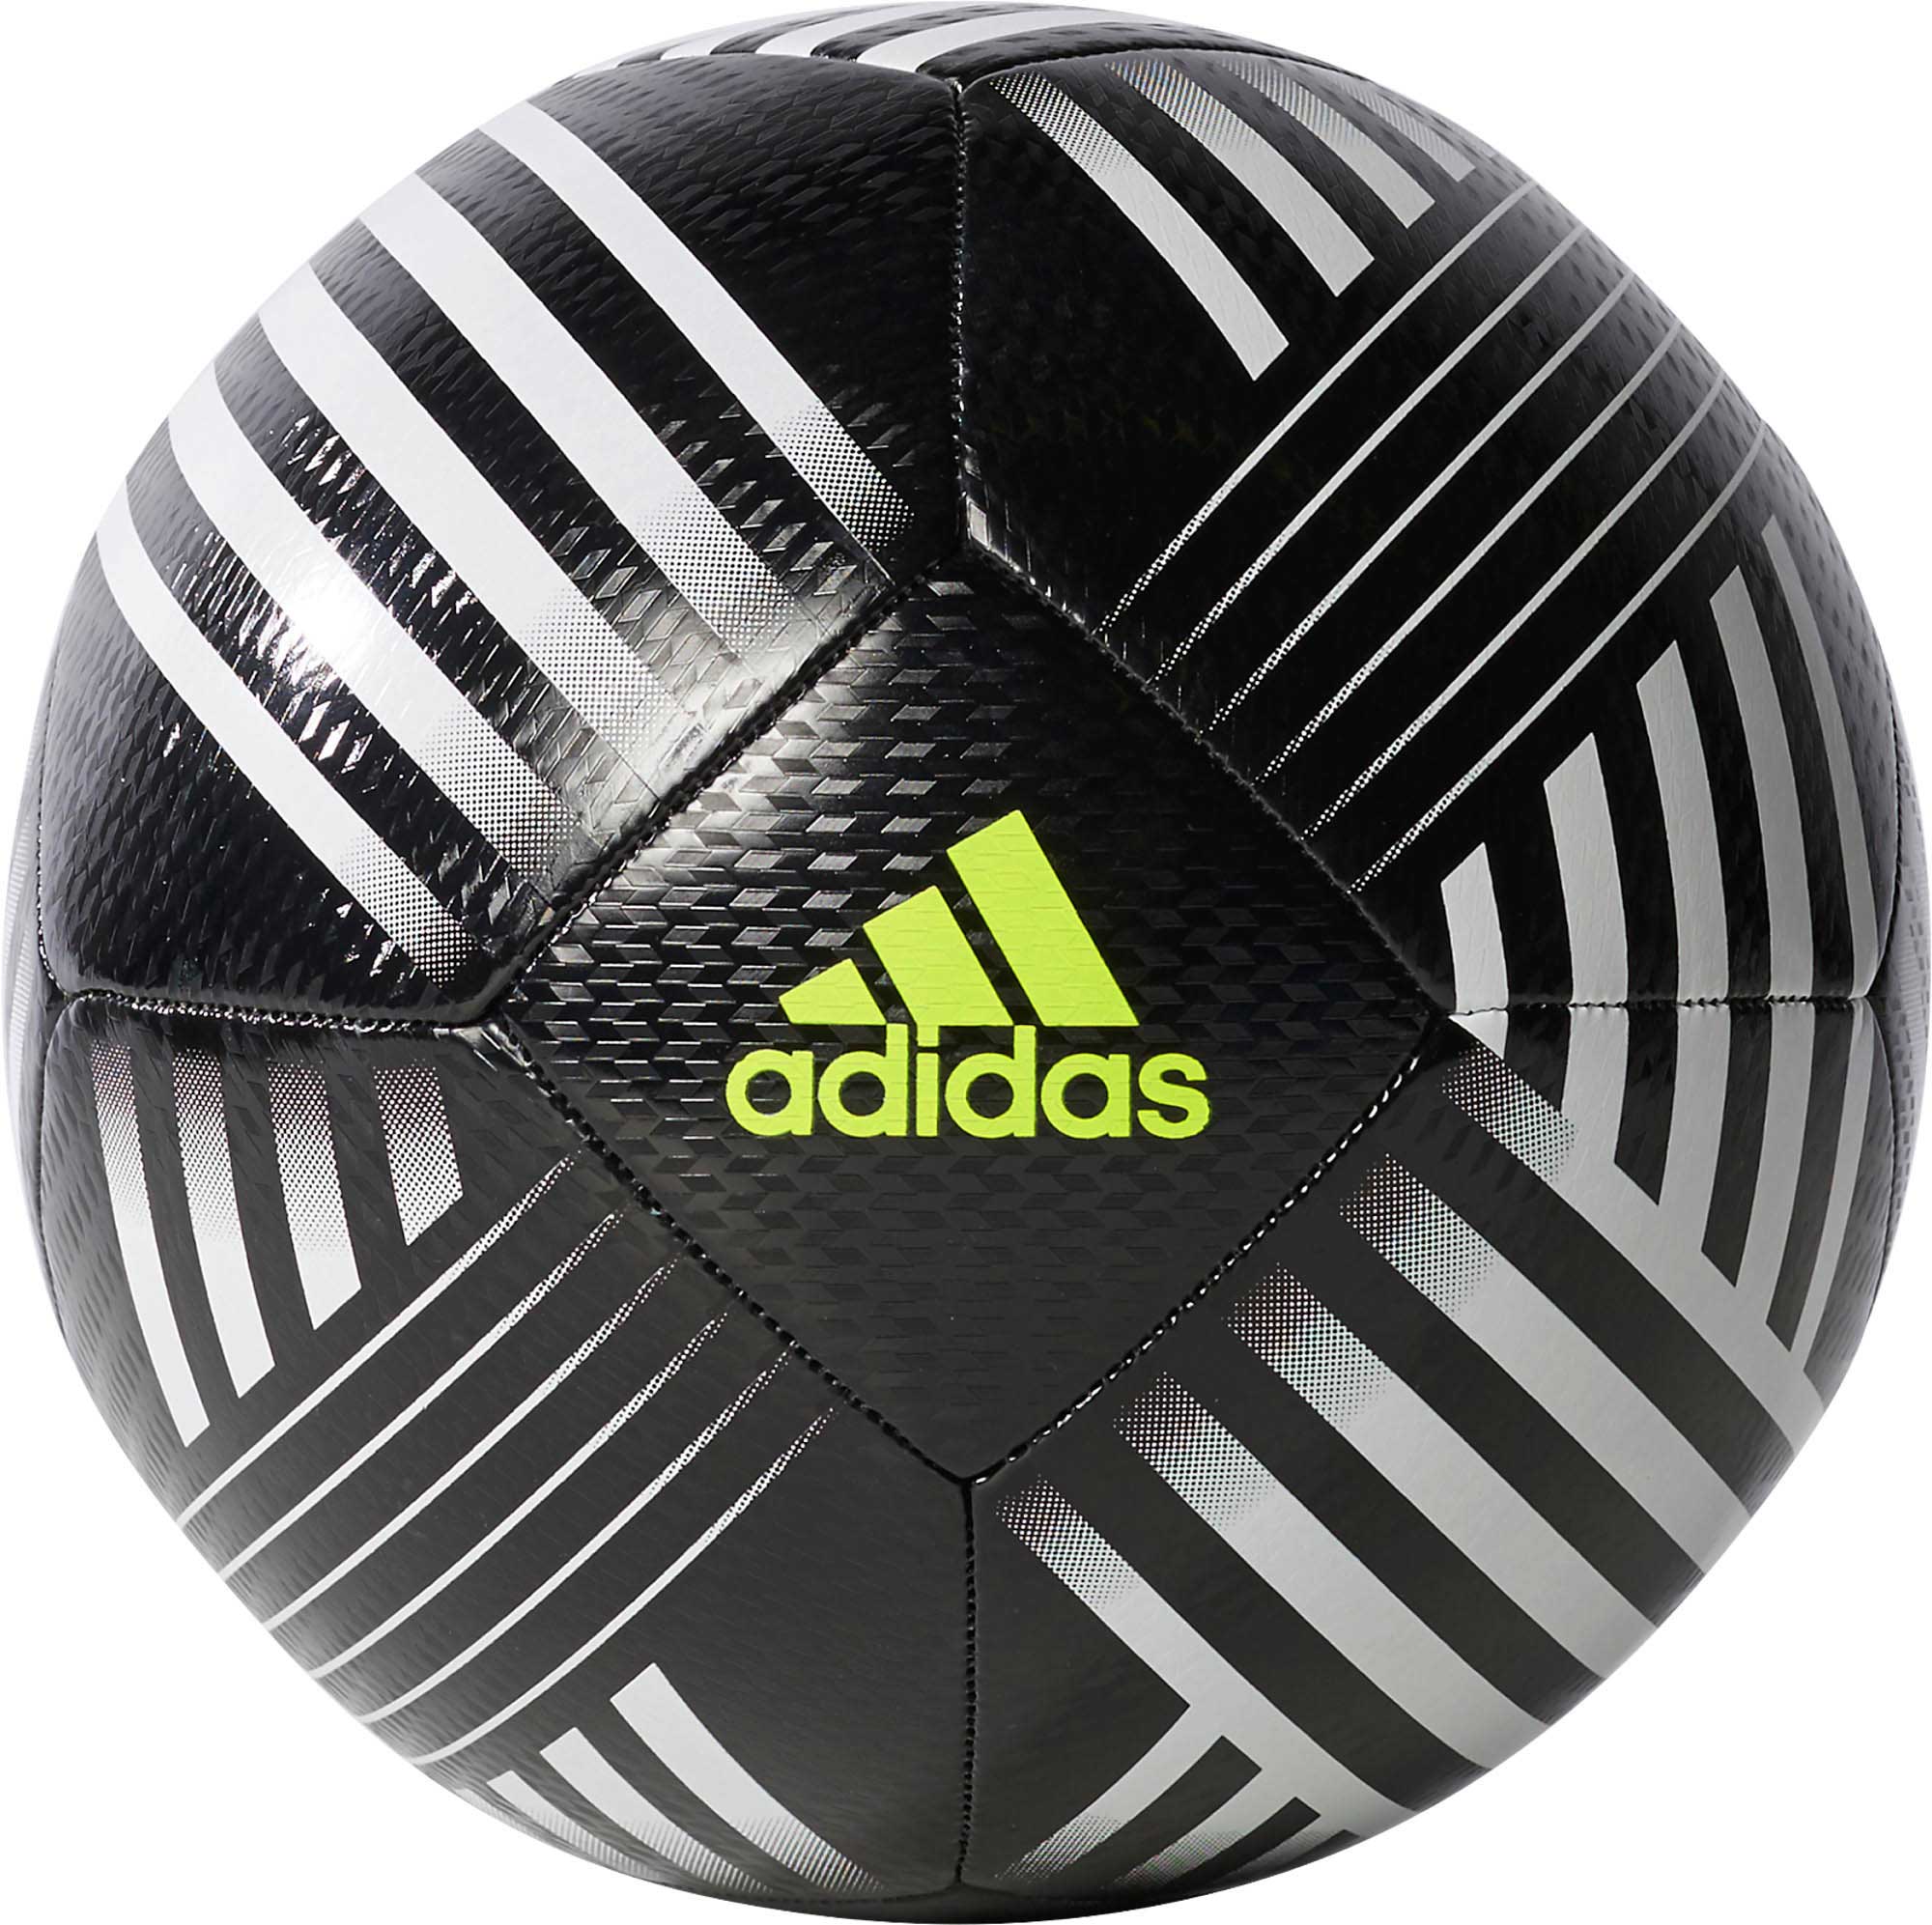 adidas Nemeziz Glider Soccer Ball 